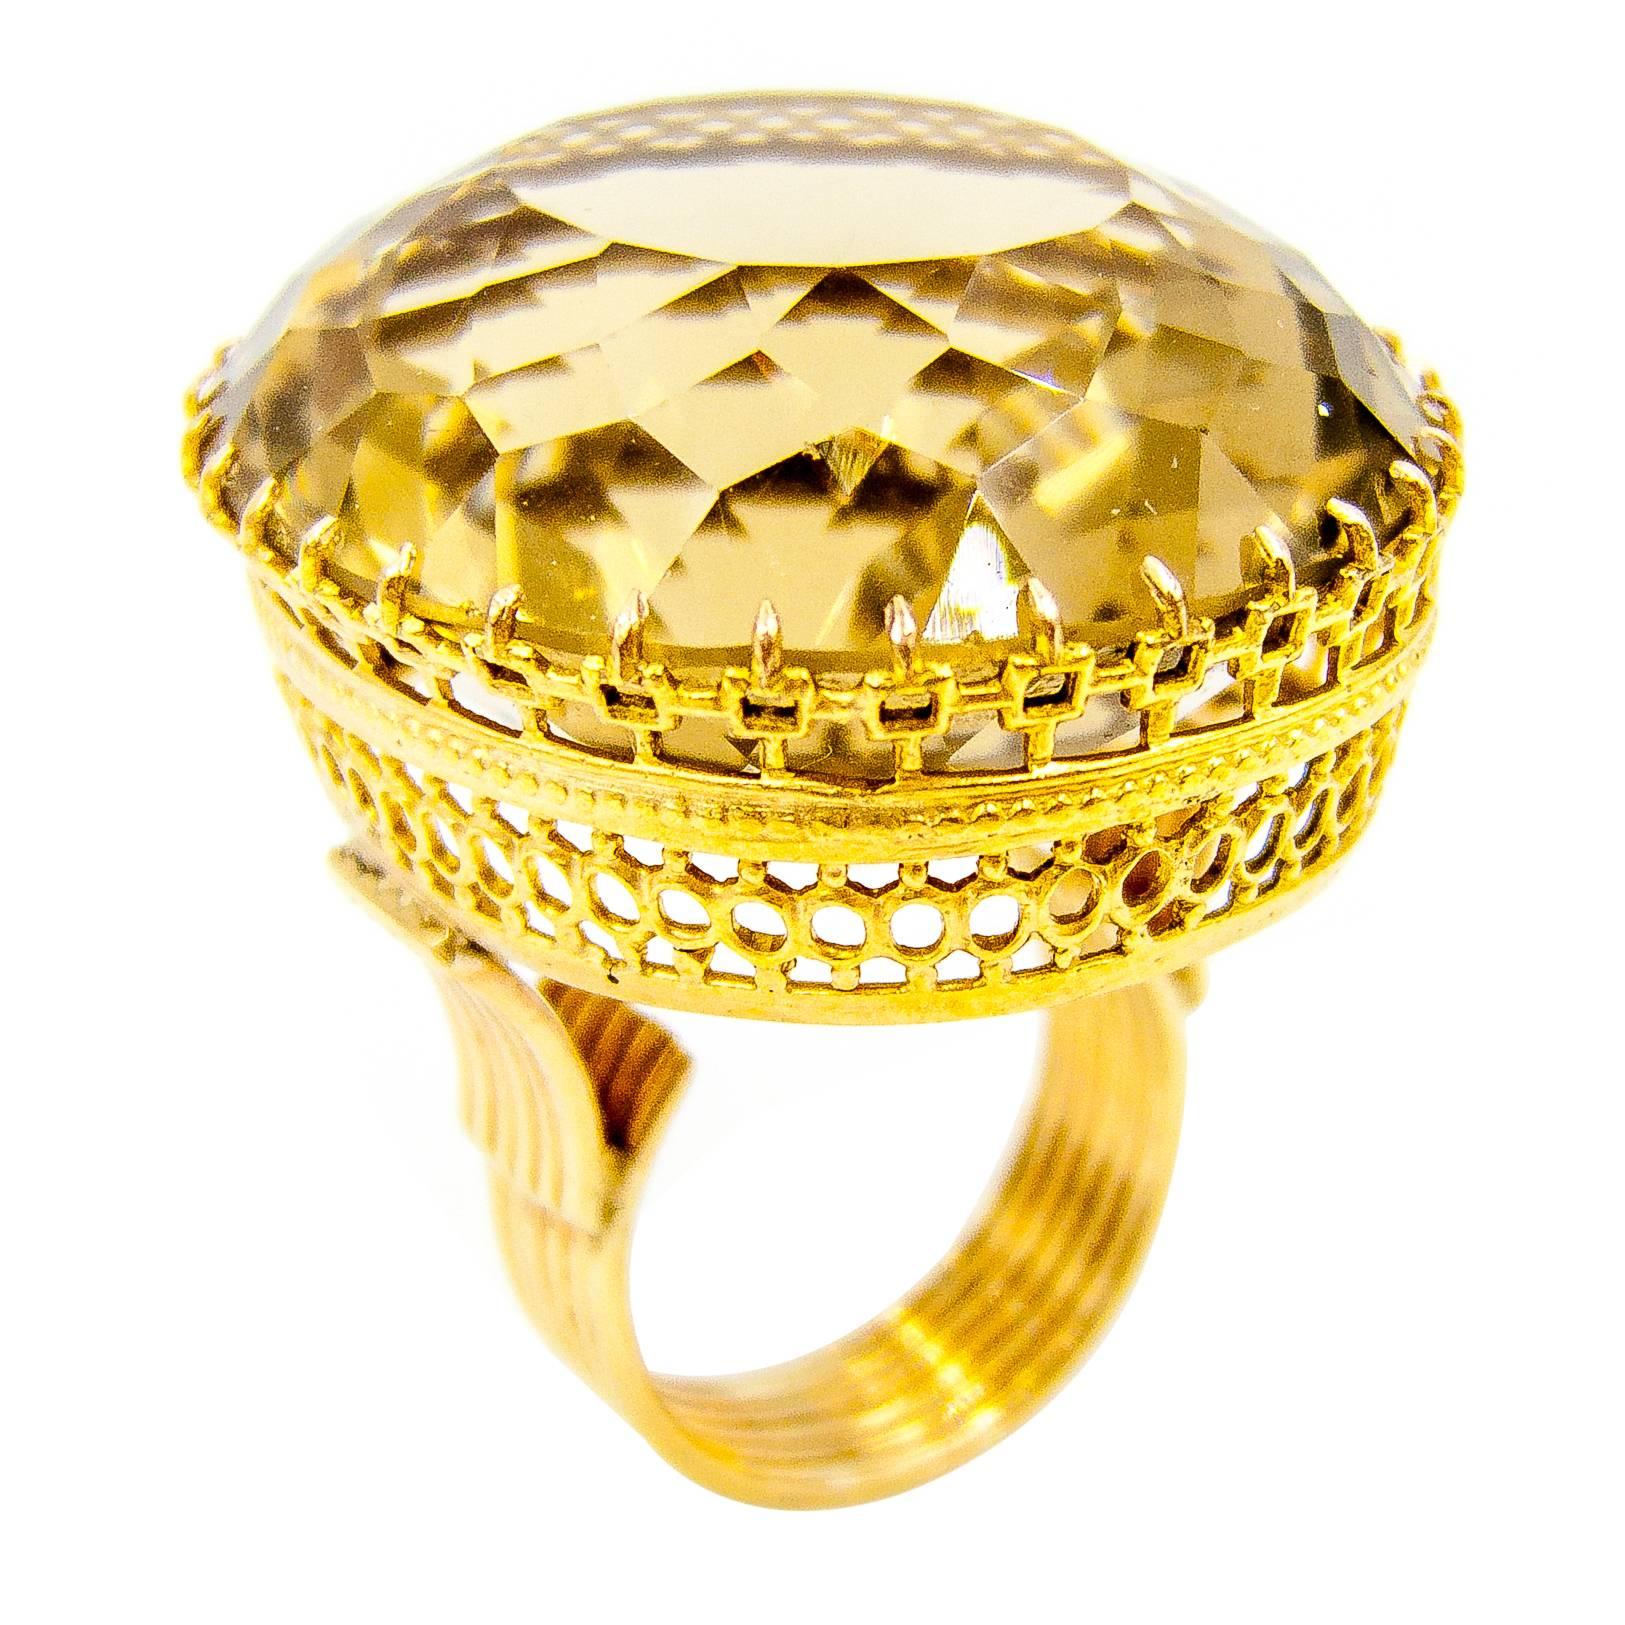 Regal Victorian Era Smoky Citrine Topaz Gold Cocktail Ring